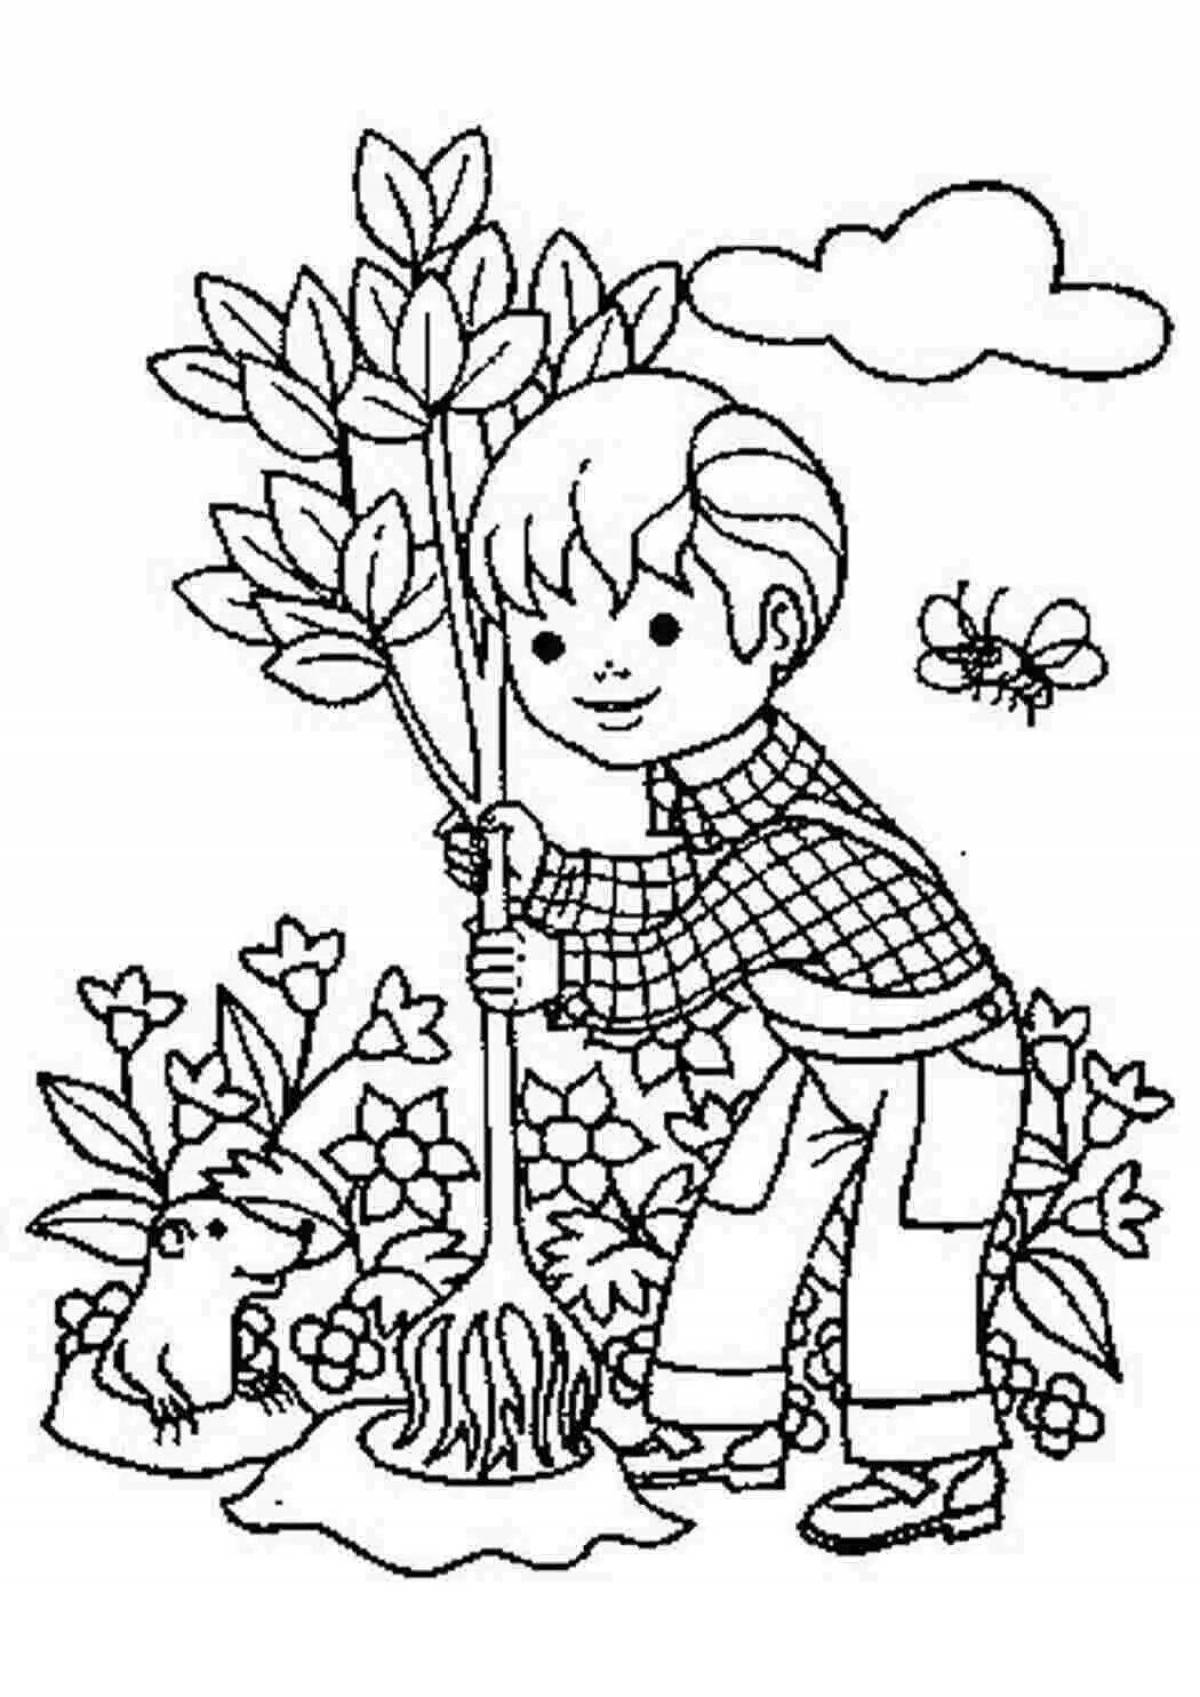 Joyful eco coloring book for kids